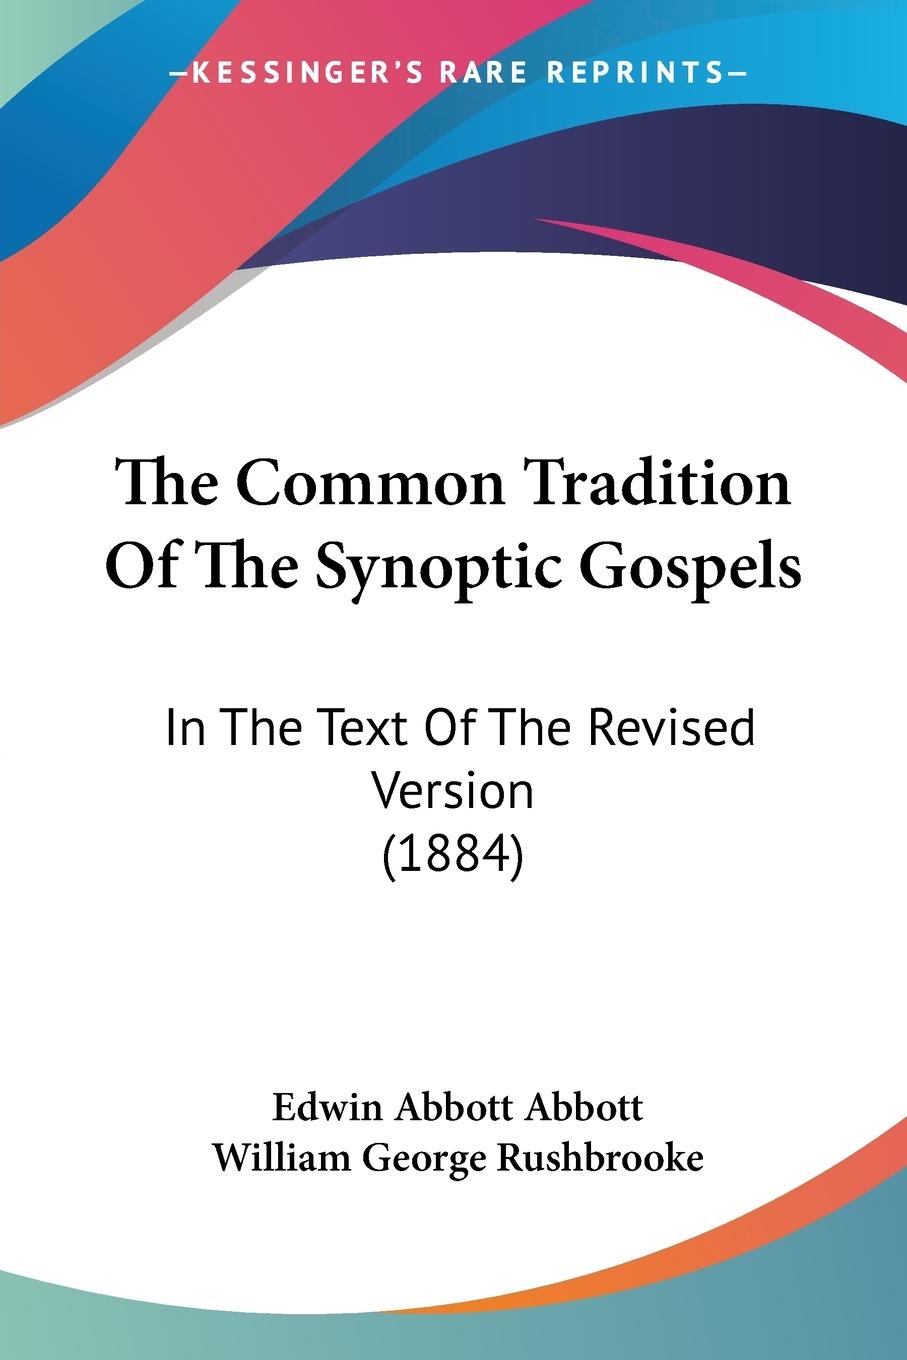 The Common Tradition Of The Synoptic Gospels - Abbott, Edwin Abbott Rushbrooke, William George